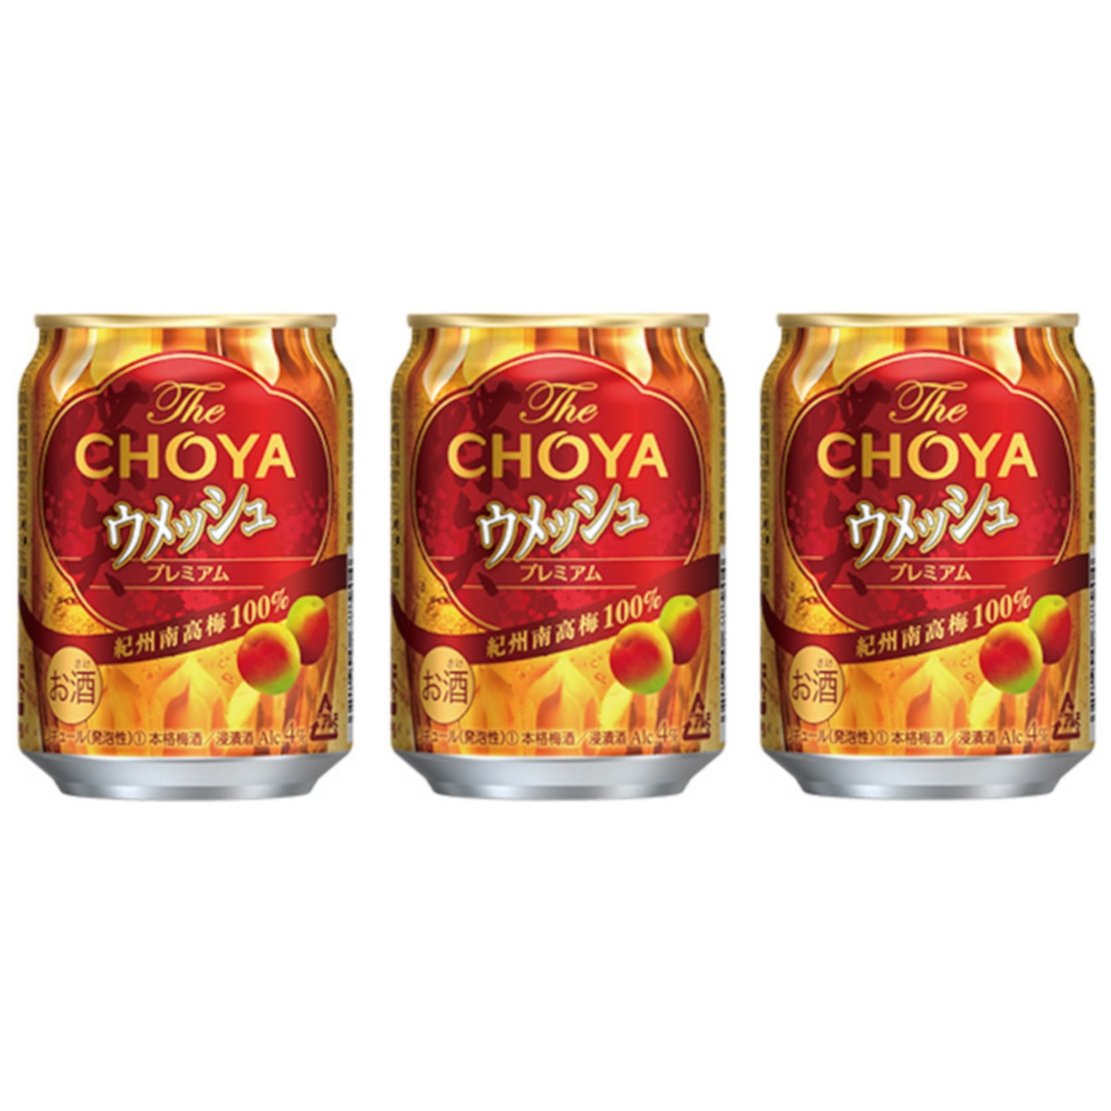 Choya Sparkling Umeshu 250ml - 3 Pack - Calia Australia Pty Ltd